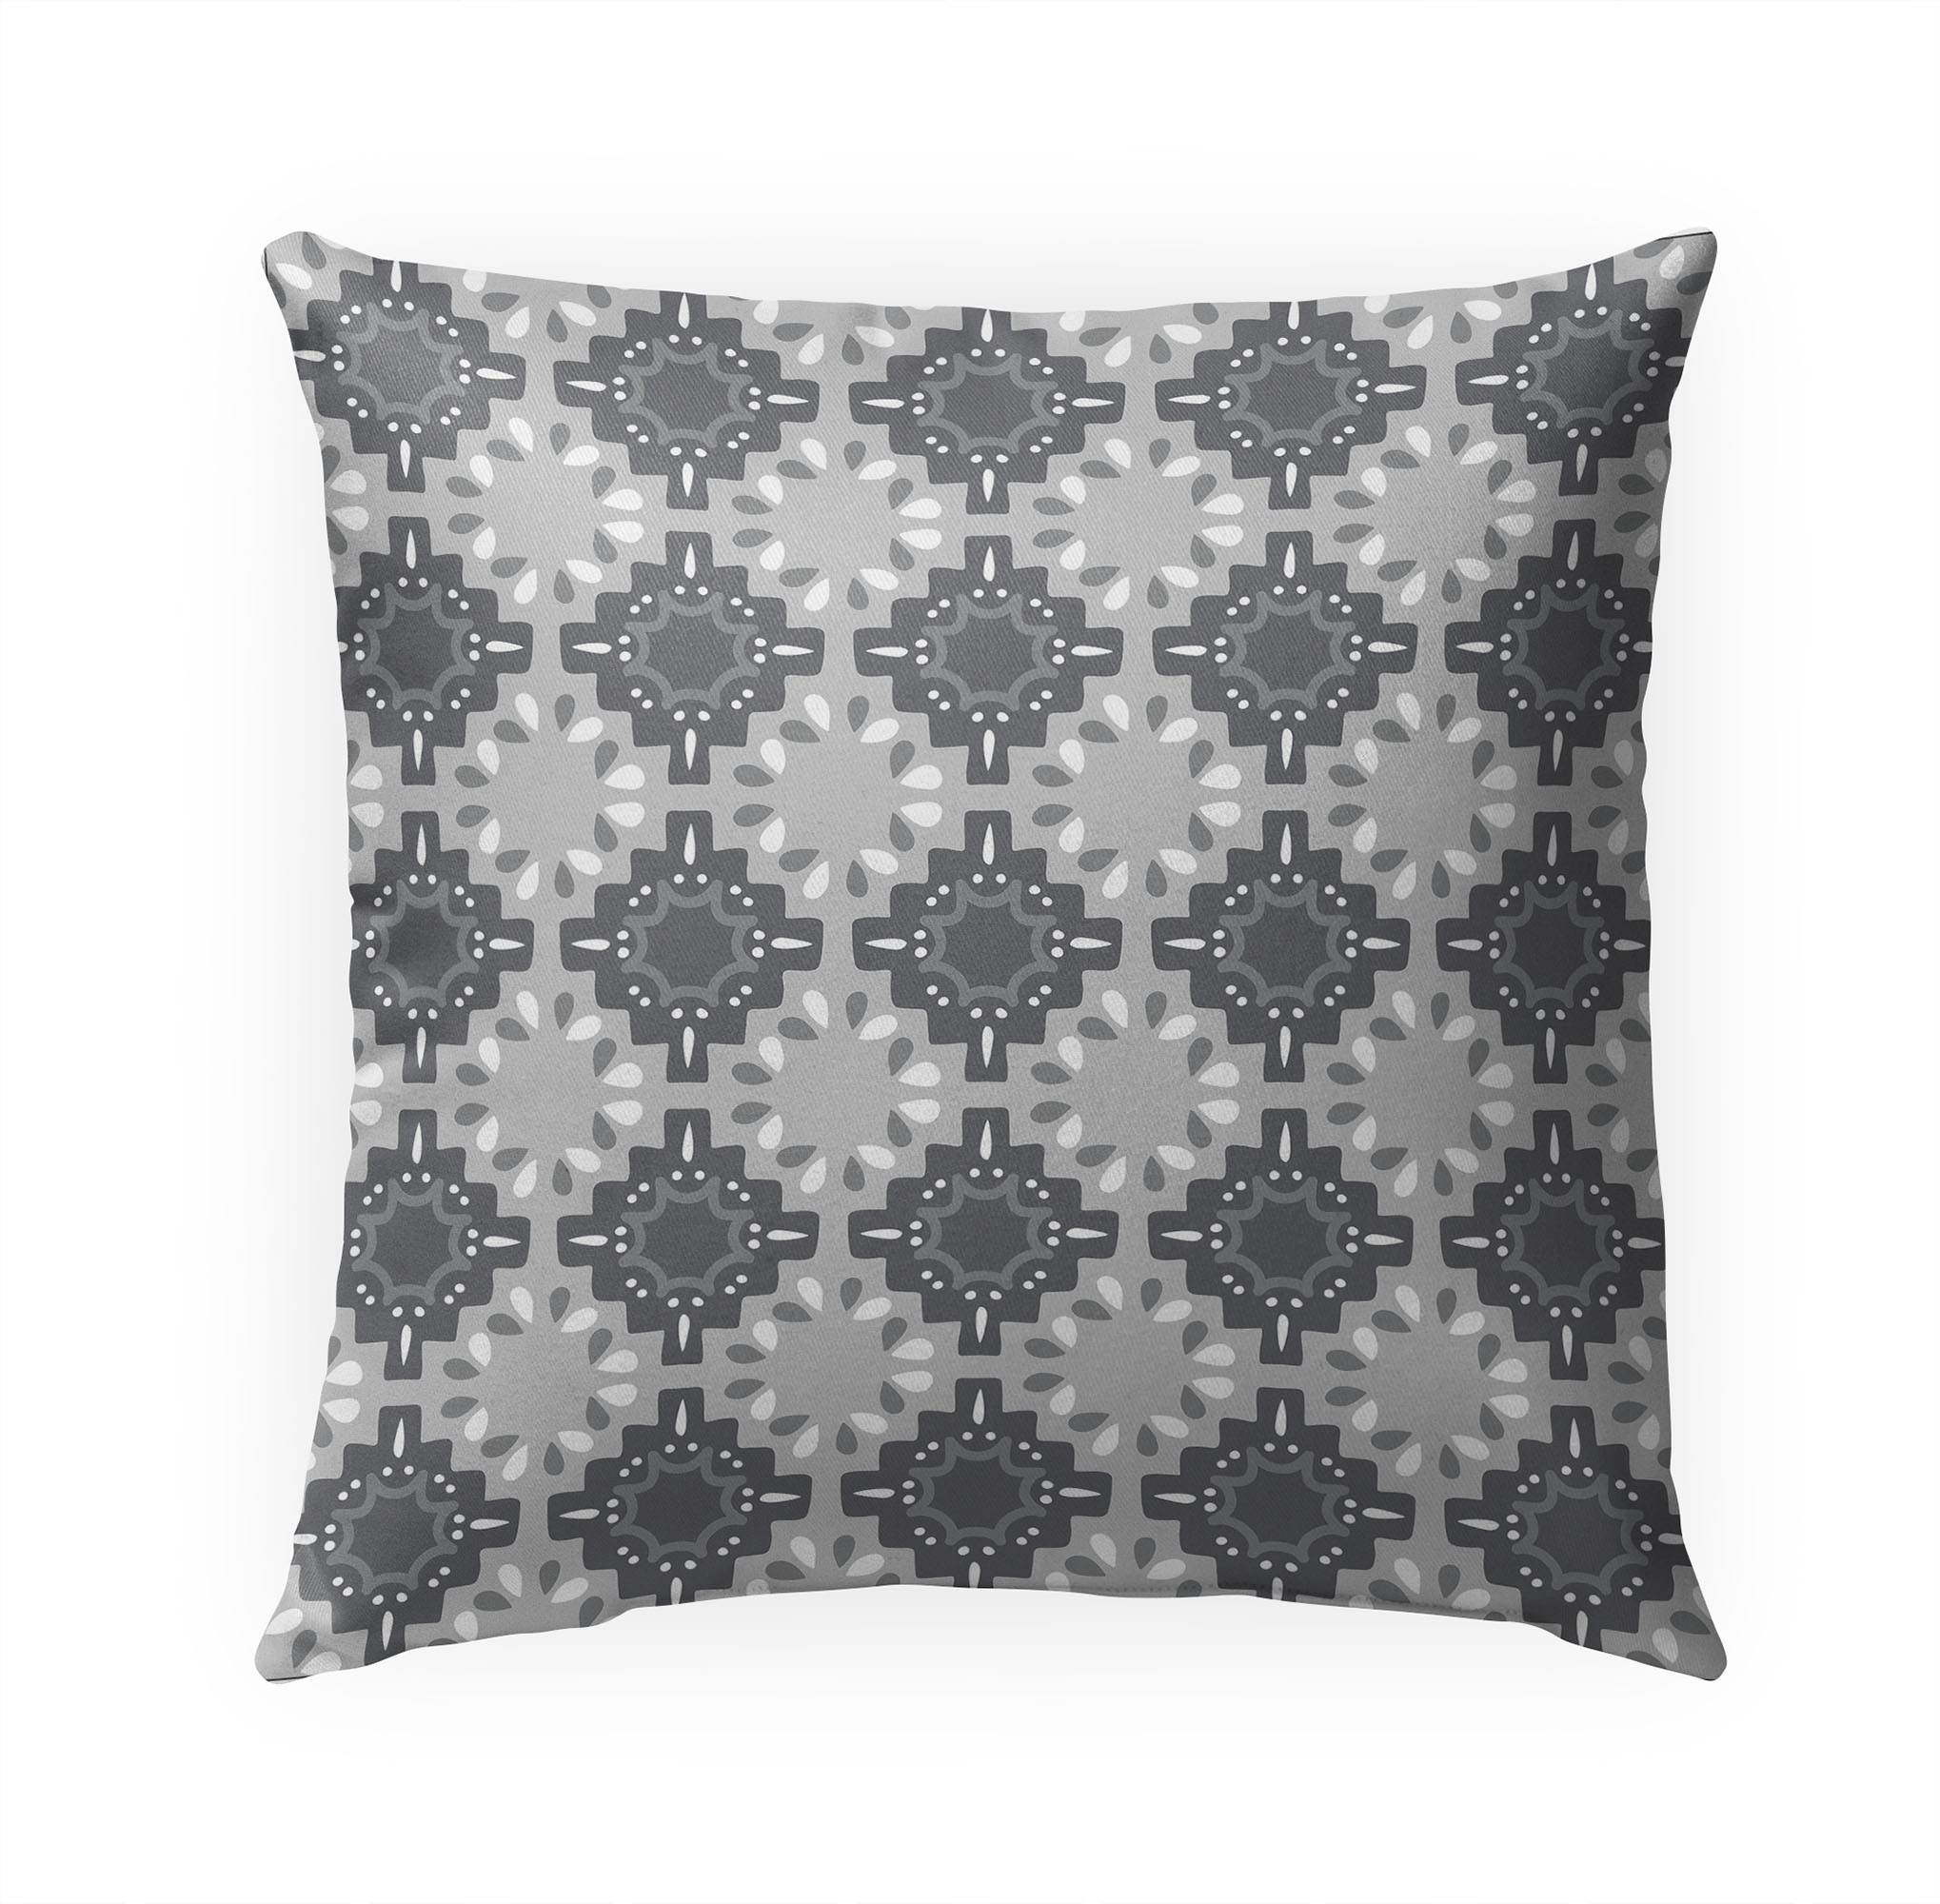 Estrella Stone Outdoor Pillow by Kavka Designs - image 1 of 5